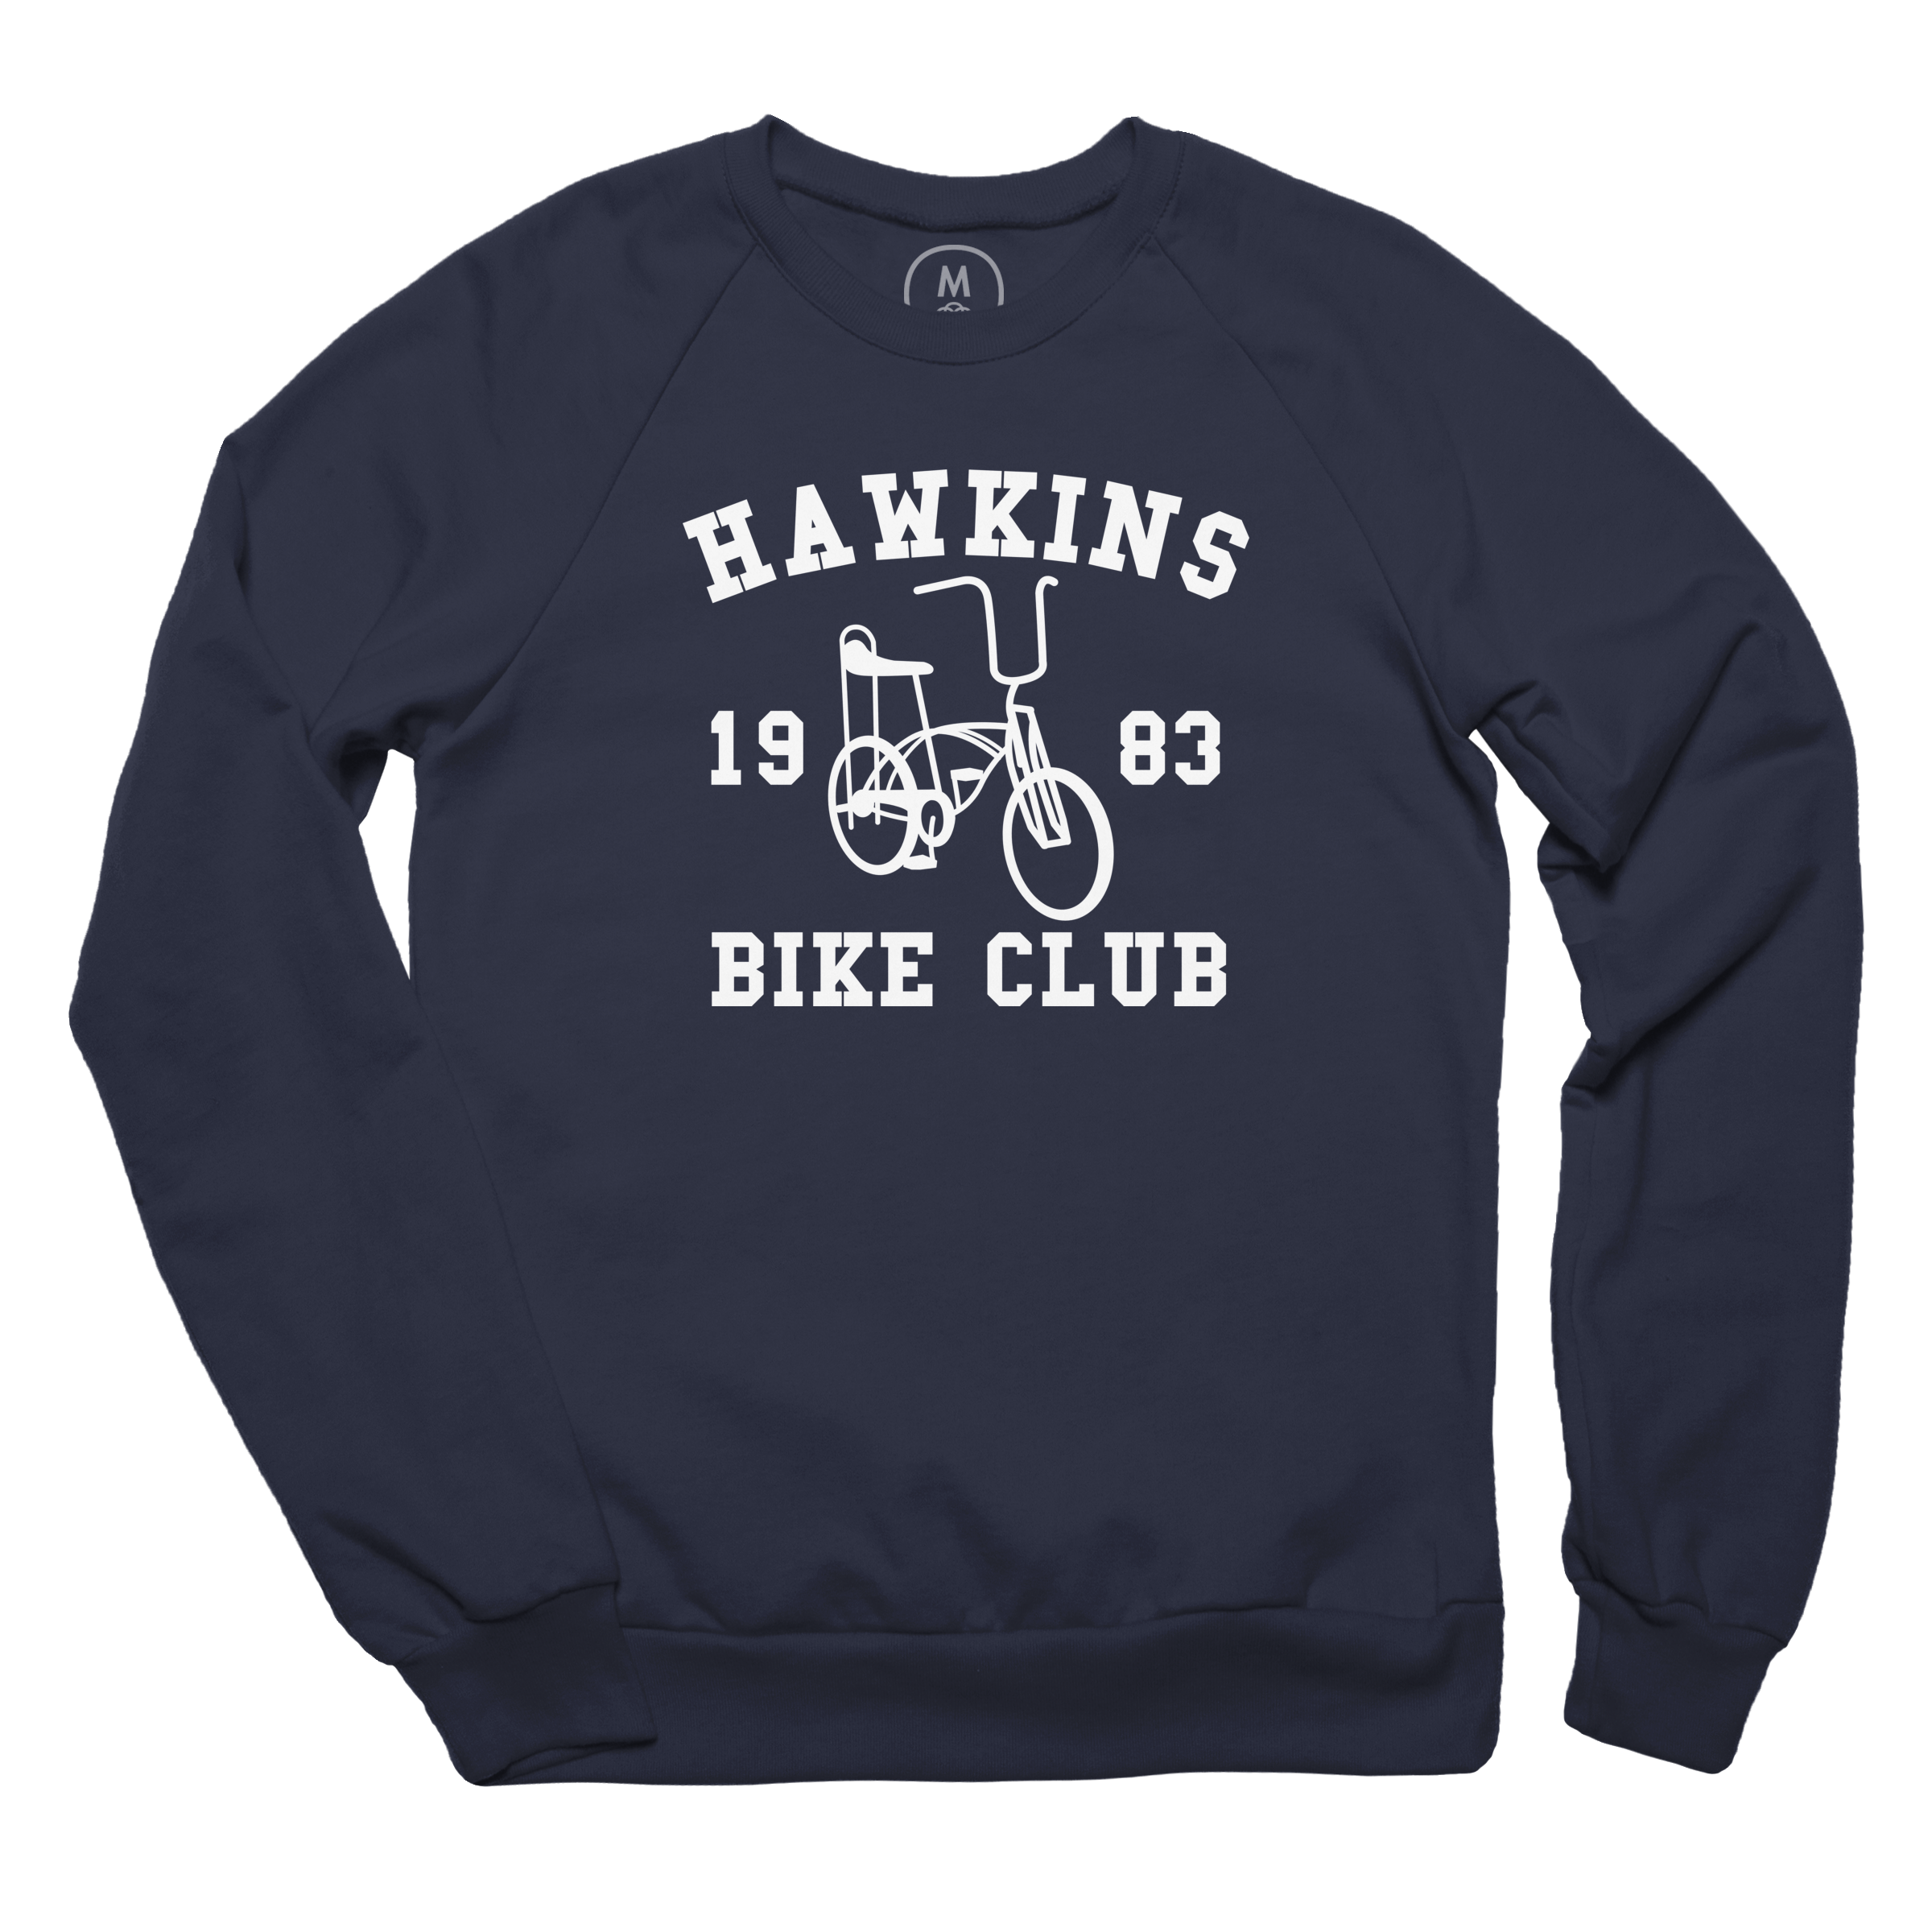 Hawkins Bike Club Sweatshirt